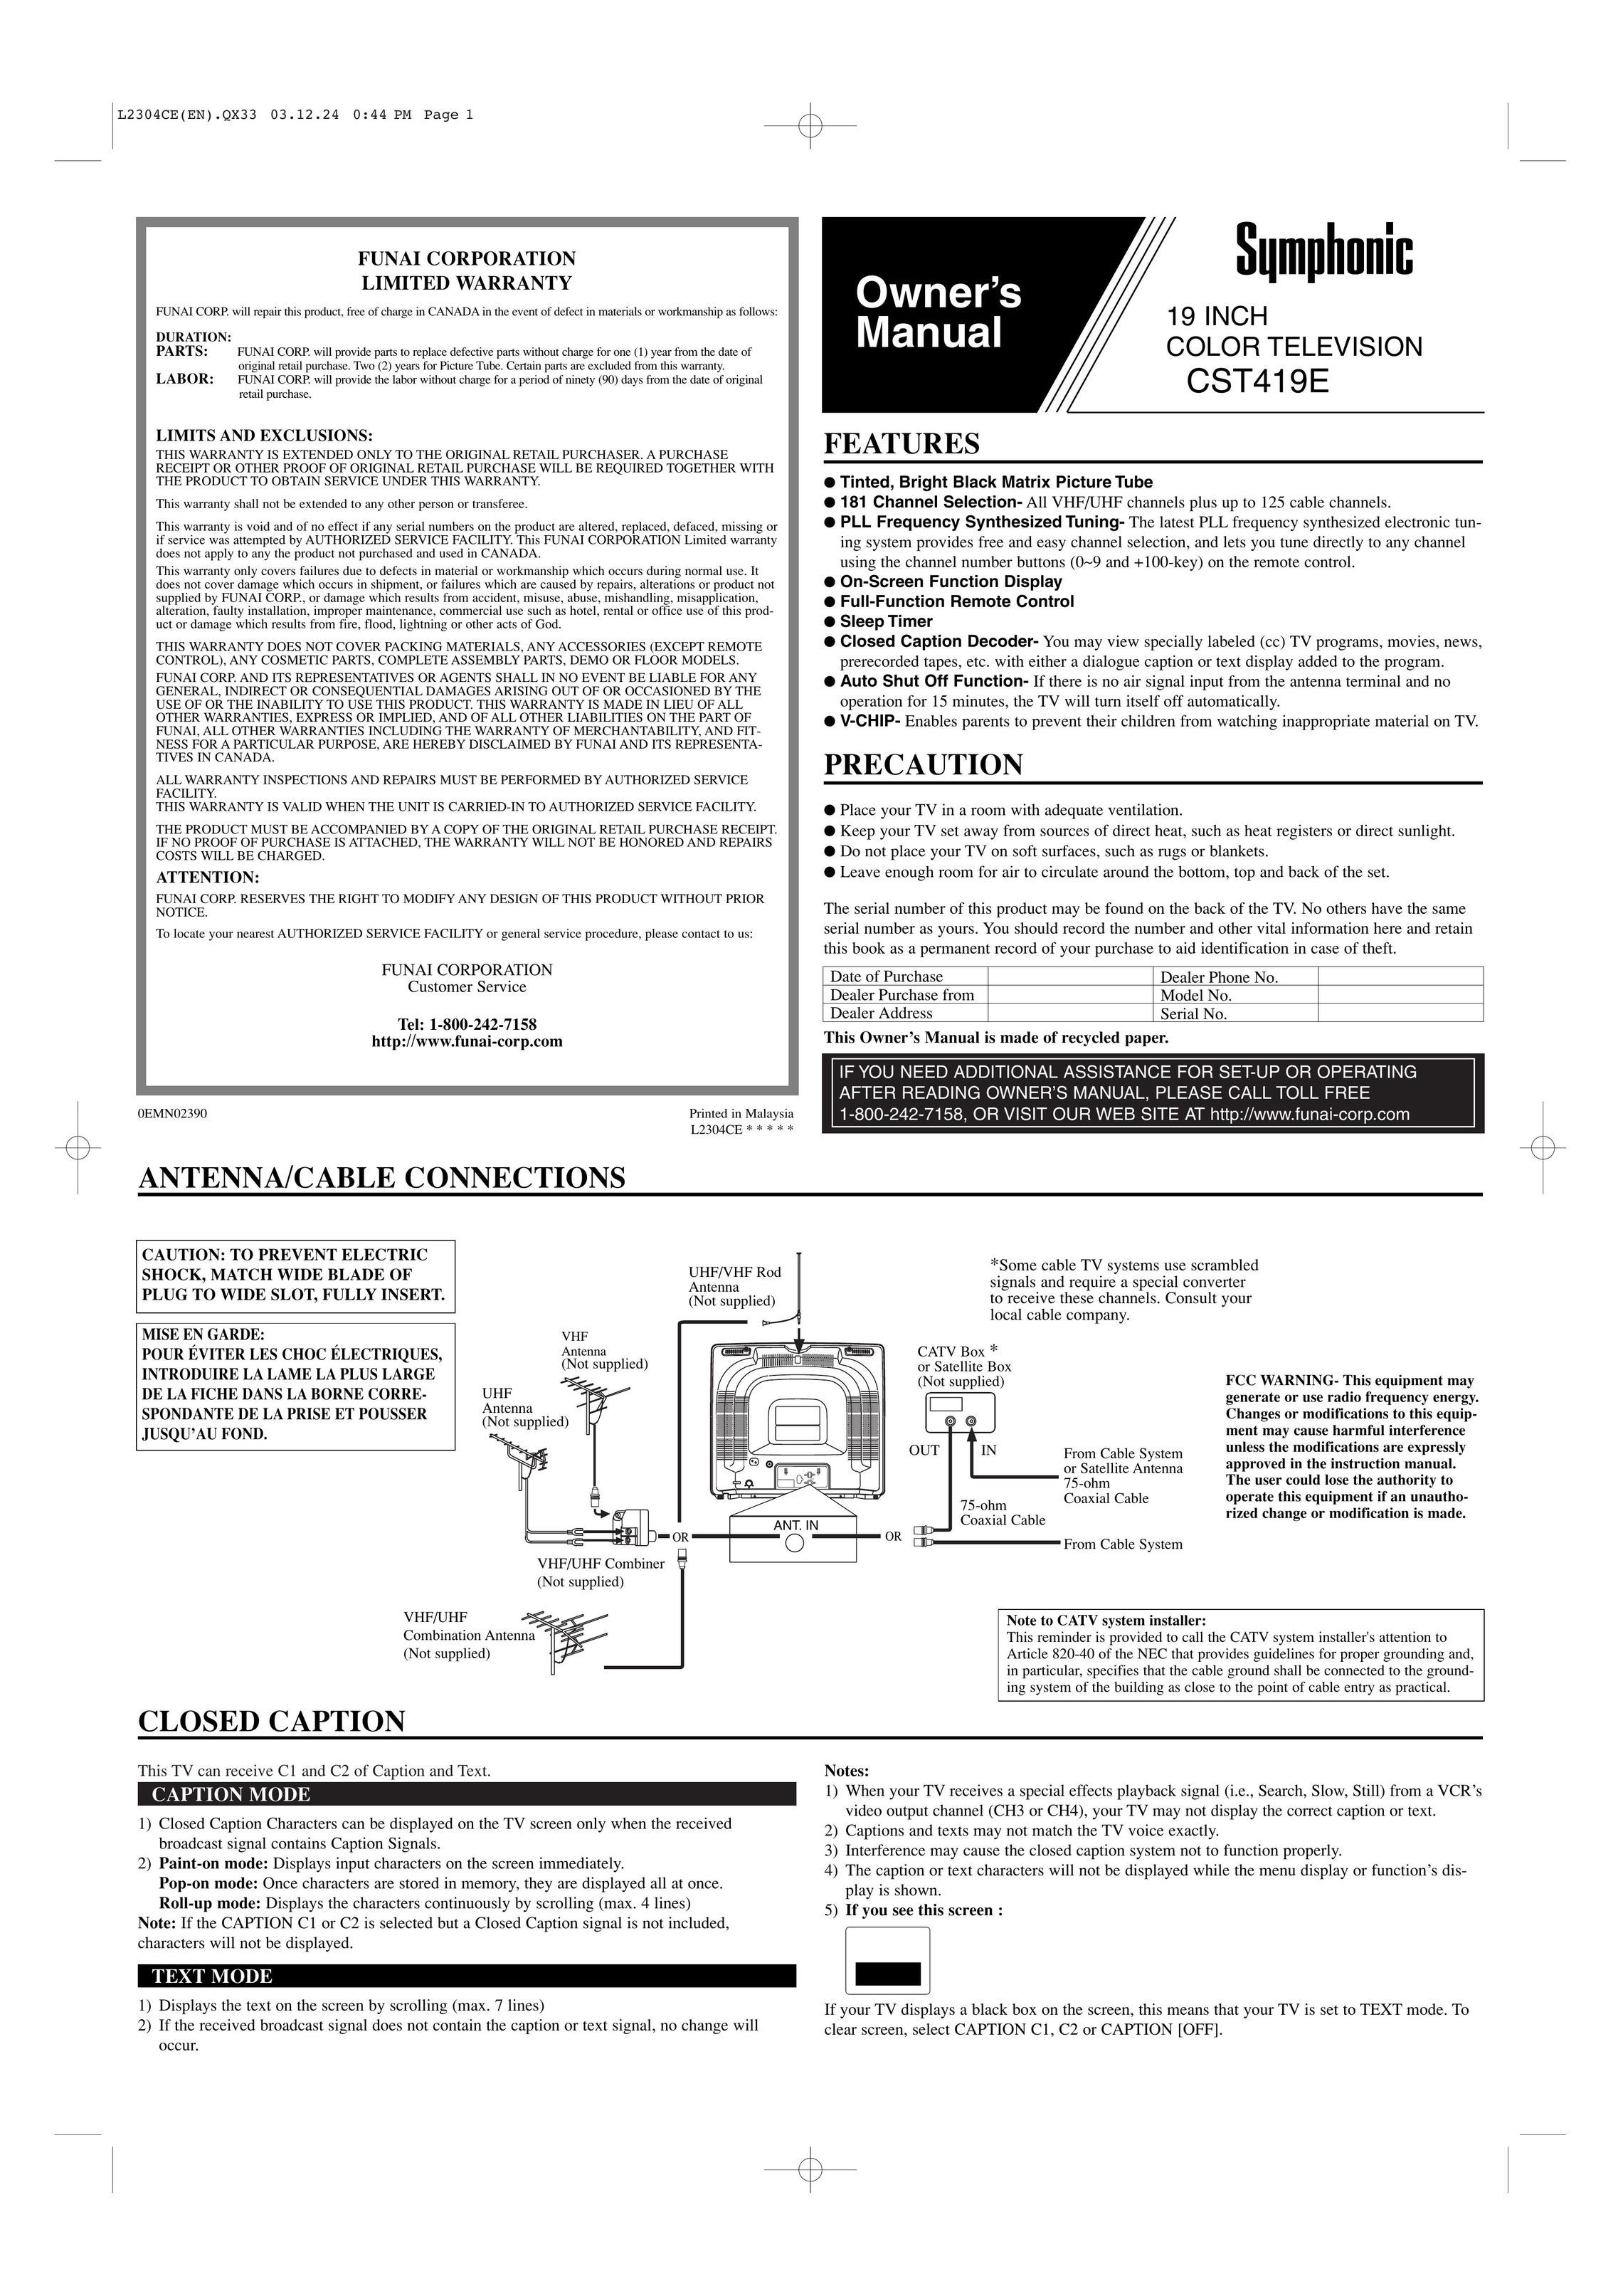 Symphonic CST419E CRT Television User Manual